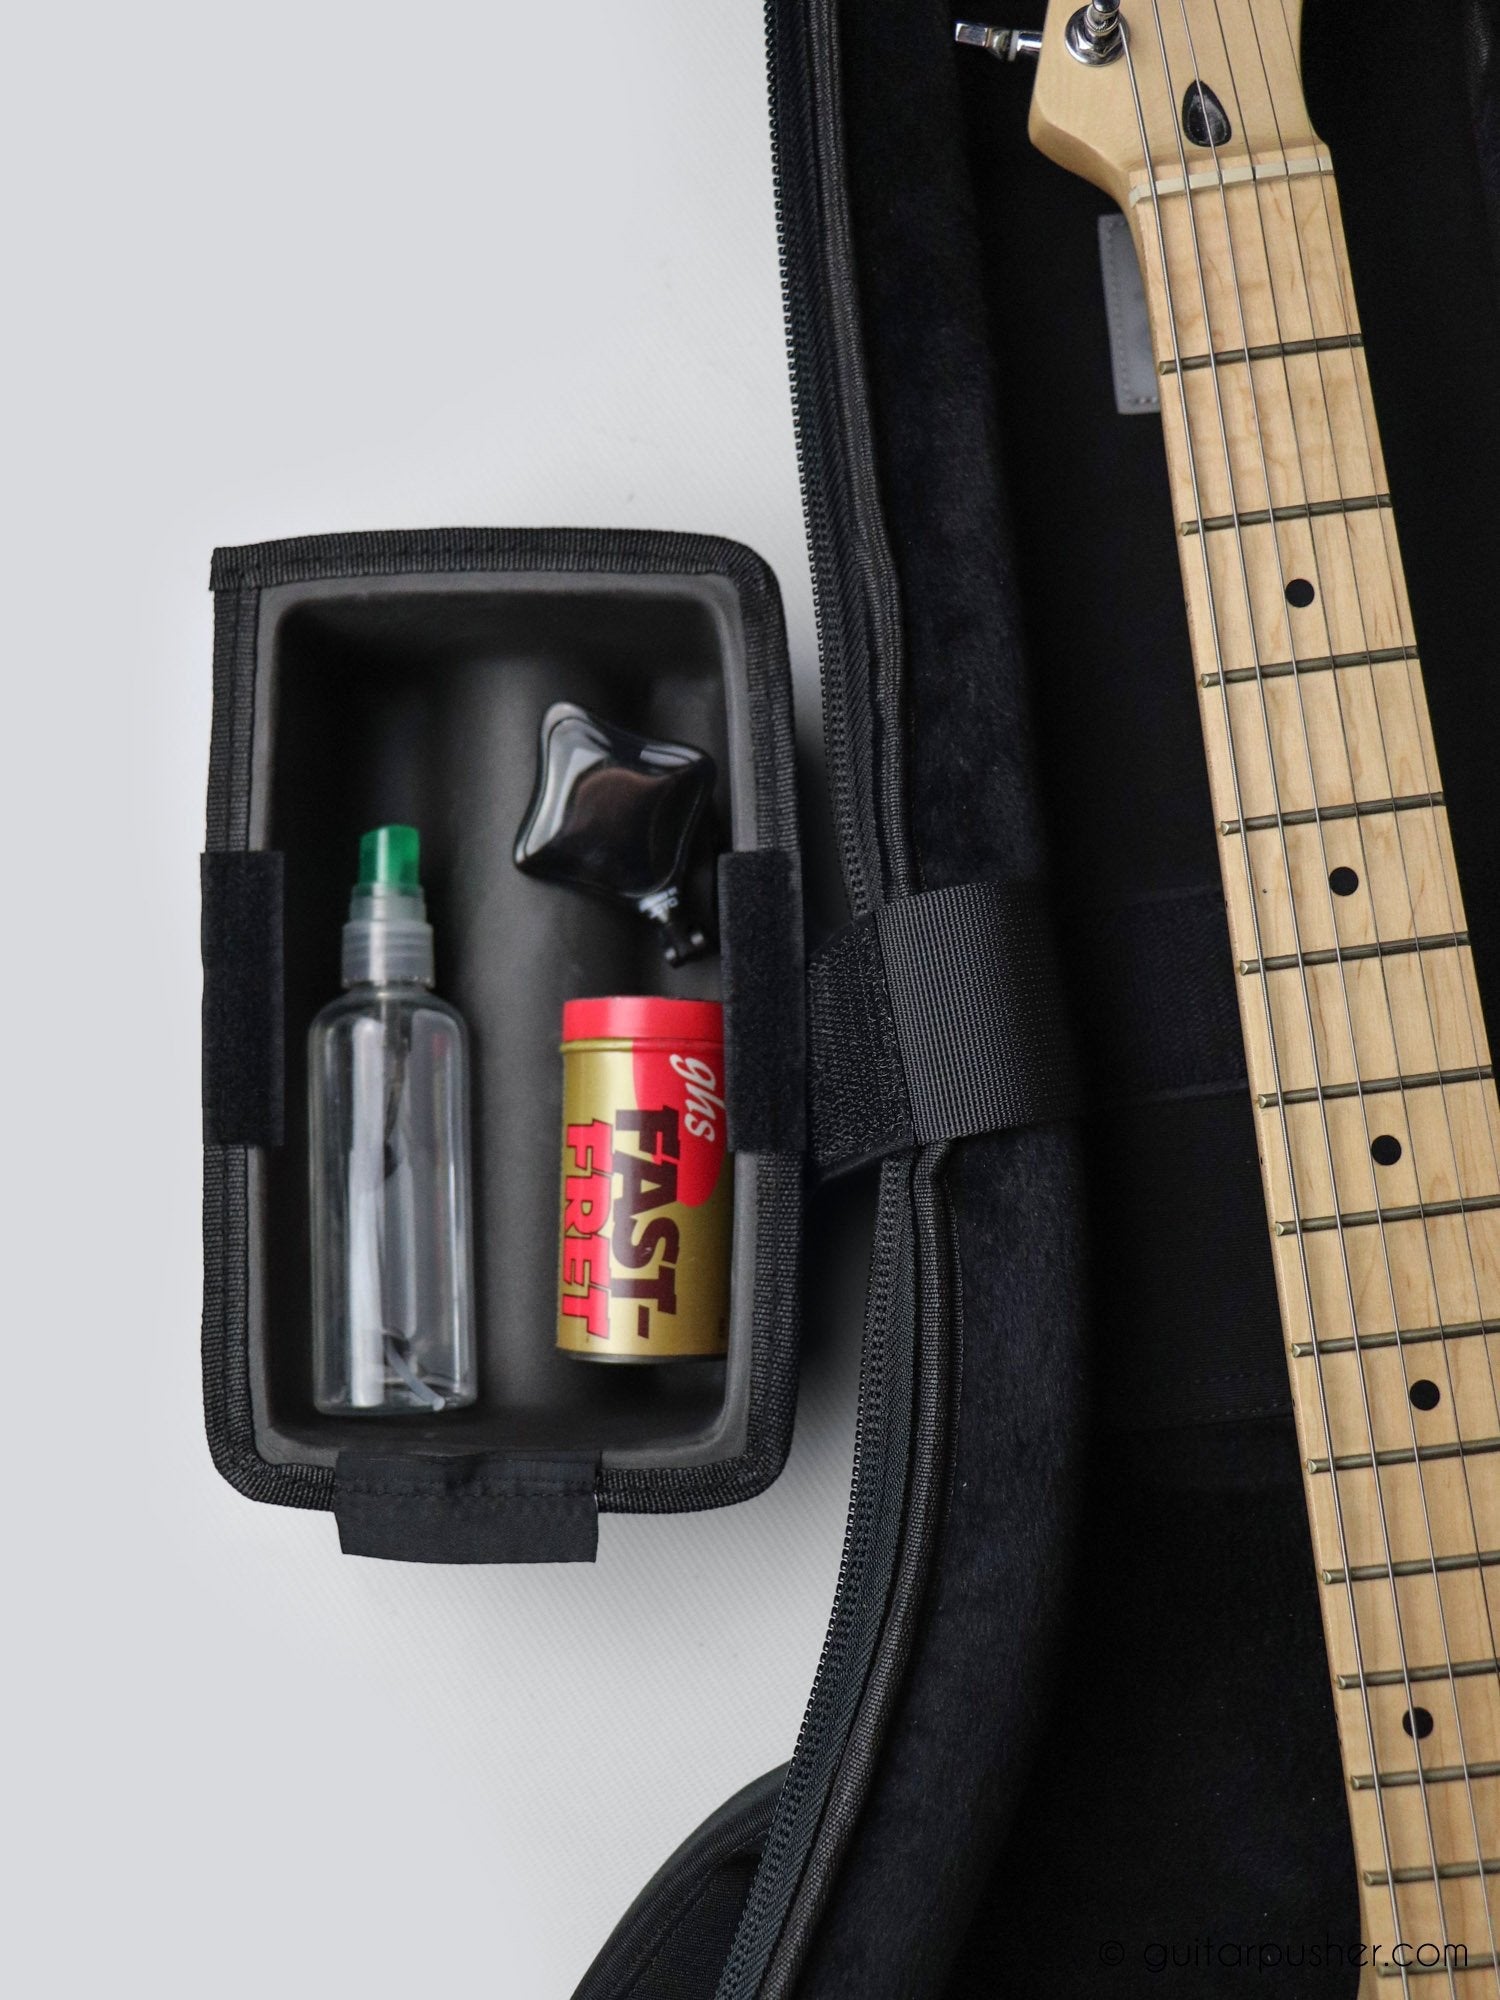 Kavaborg LUX Waterproof Heavy Padded Electric Guitar Gig Bag (FB-50E) - GuitarPusher